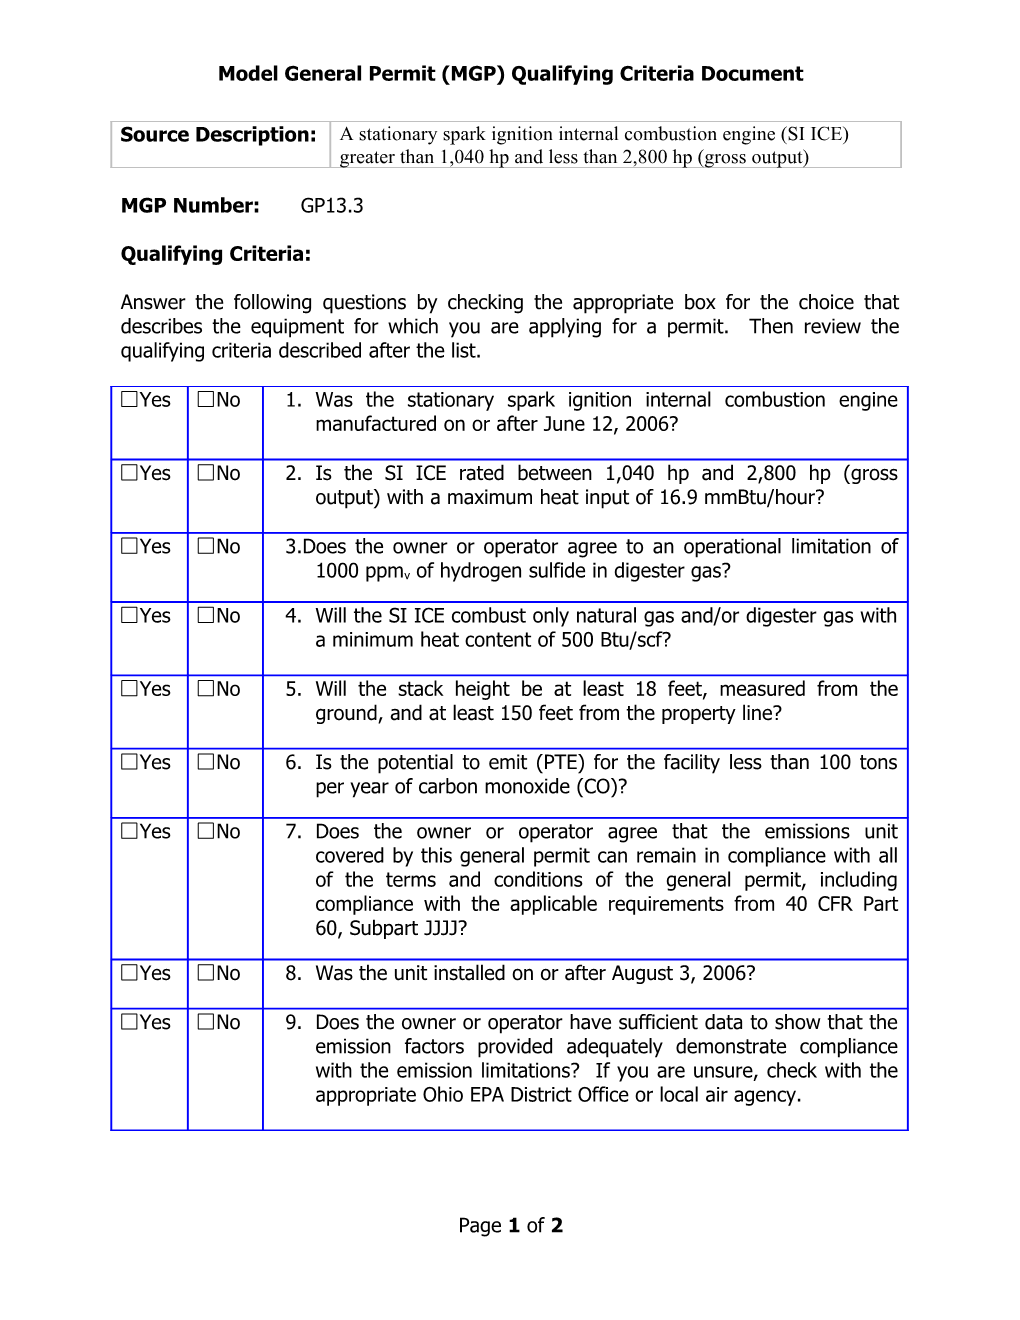 Model General Permit (MGP) Qualifying Criteria Document s1